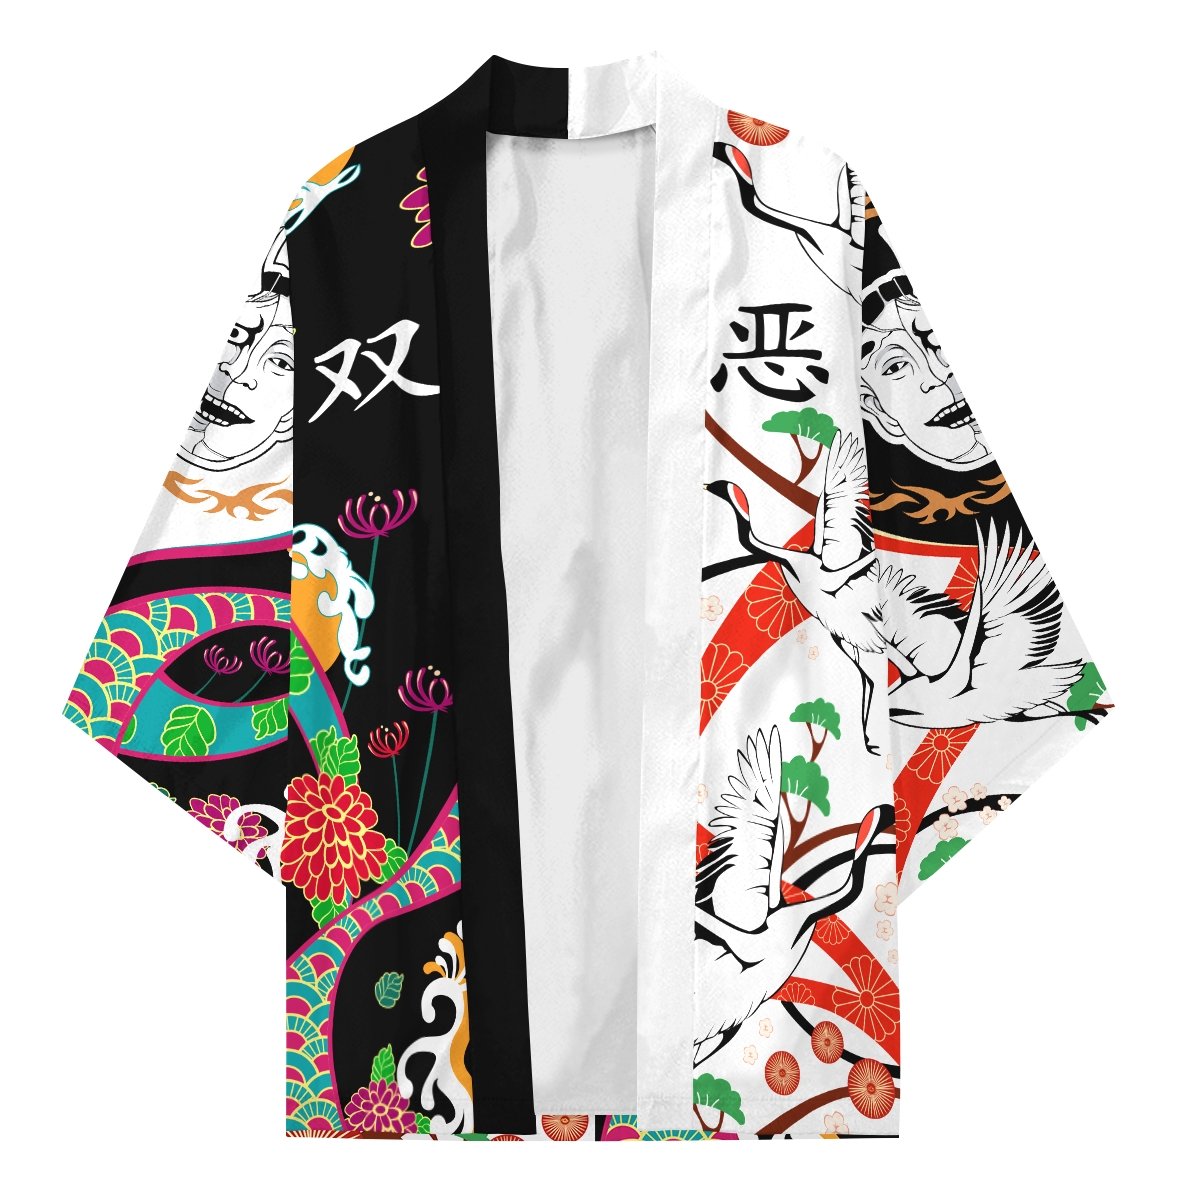 souya x nahoya kimono 175344 - Otaku Treat